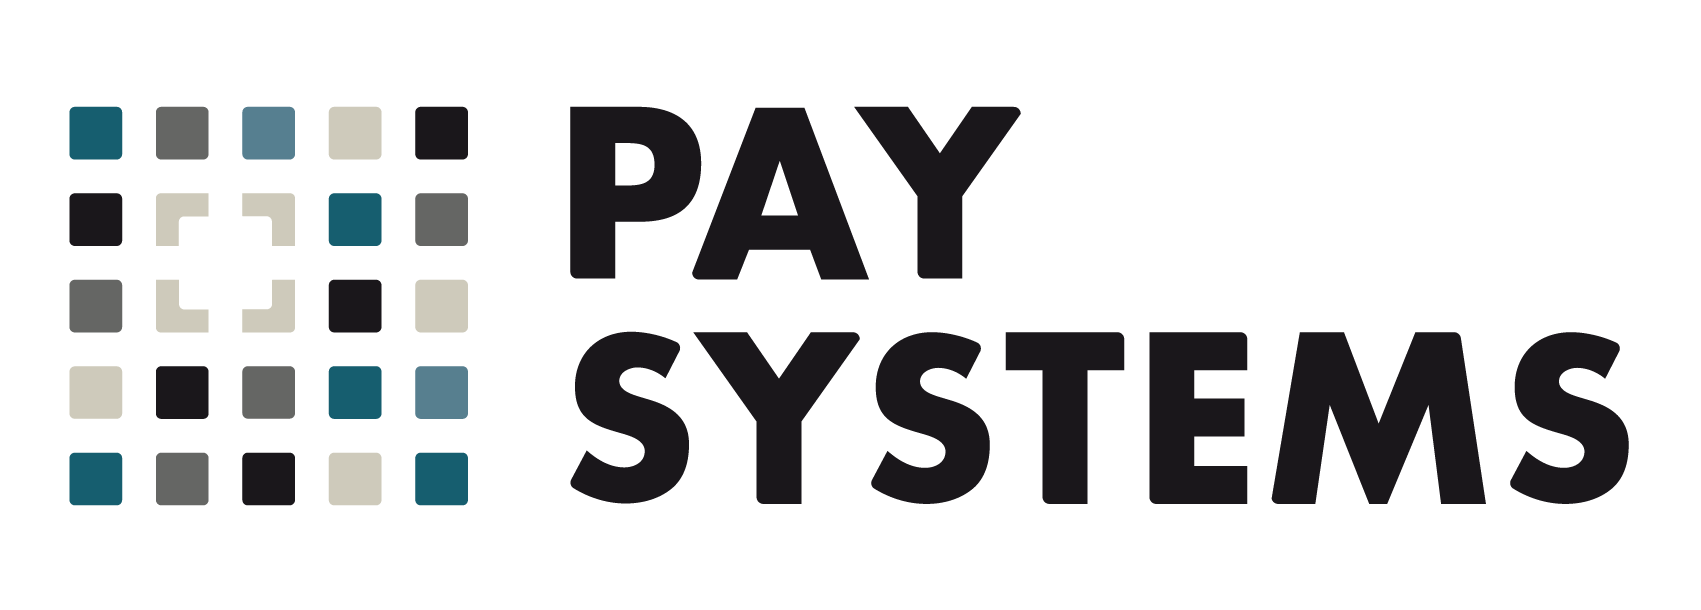 PaySystems logo